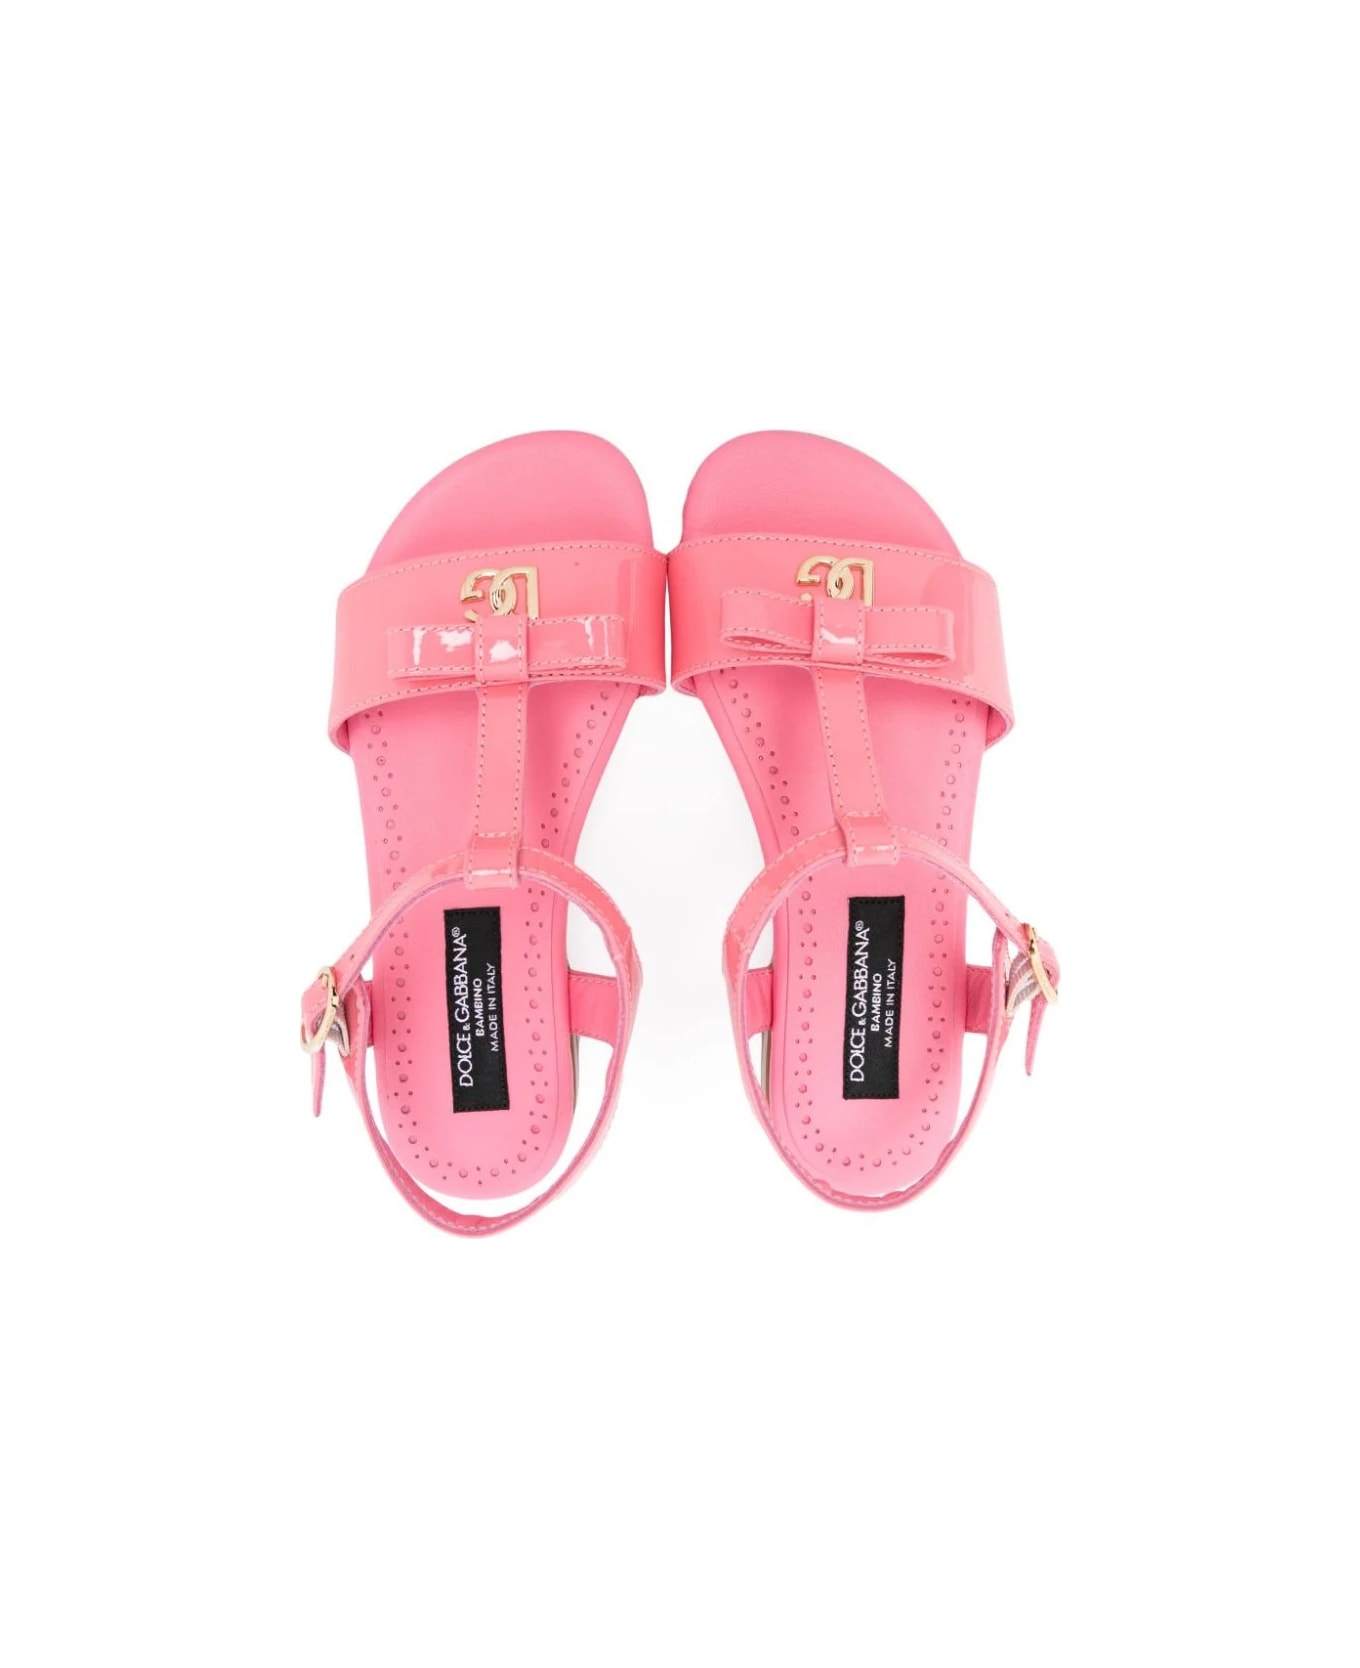 Dolce & Gabbana Blush Pink Patent Leather Sandals With Dg Logo - Pink シューズ